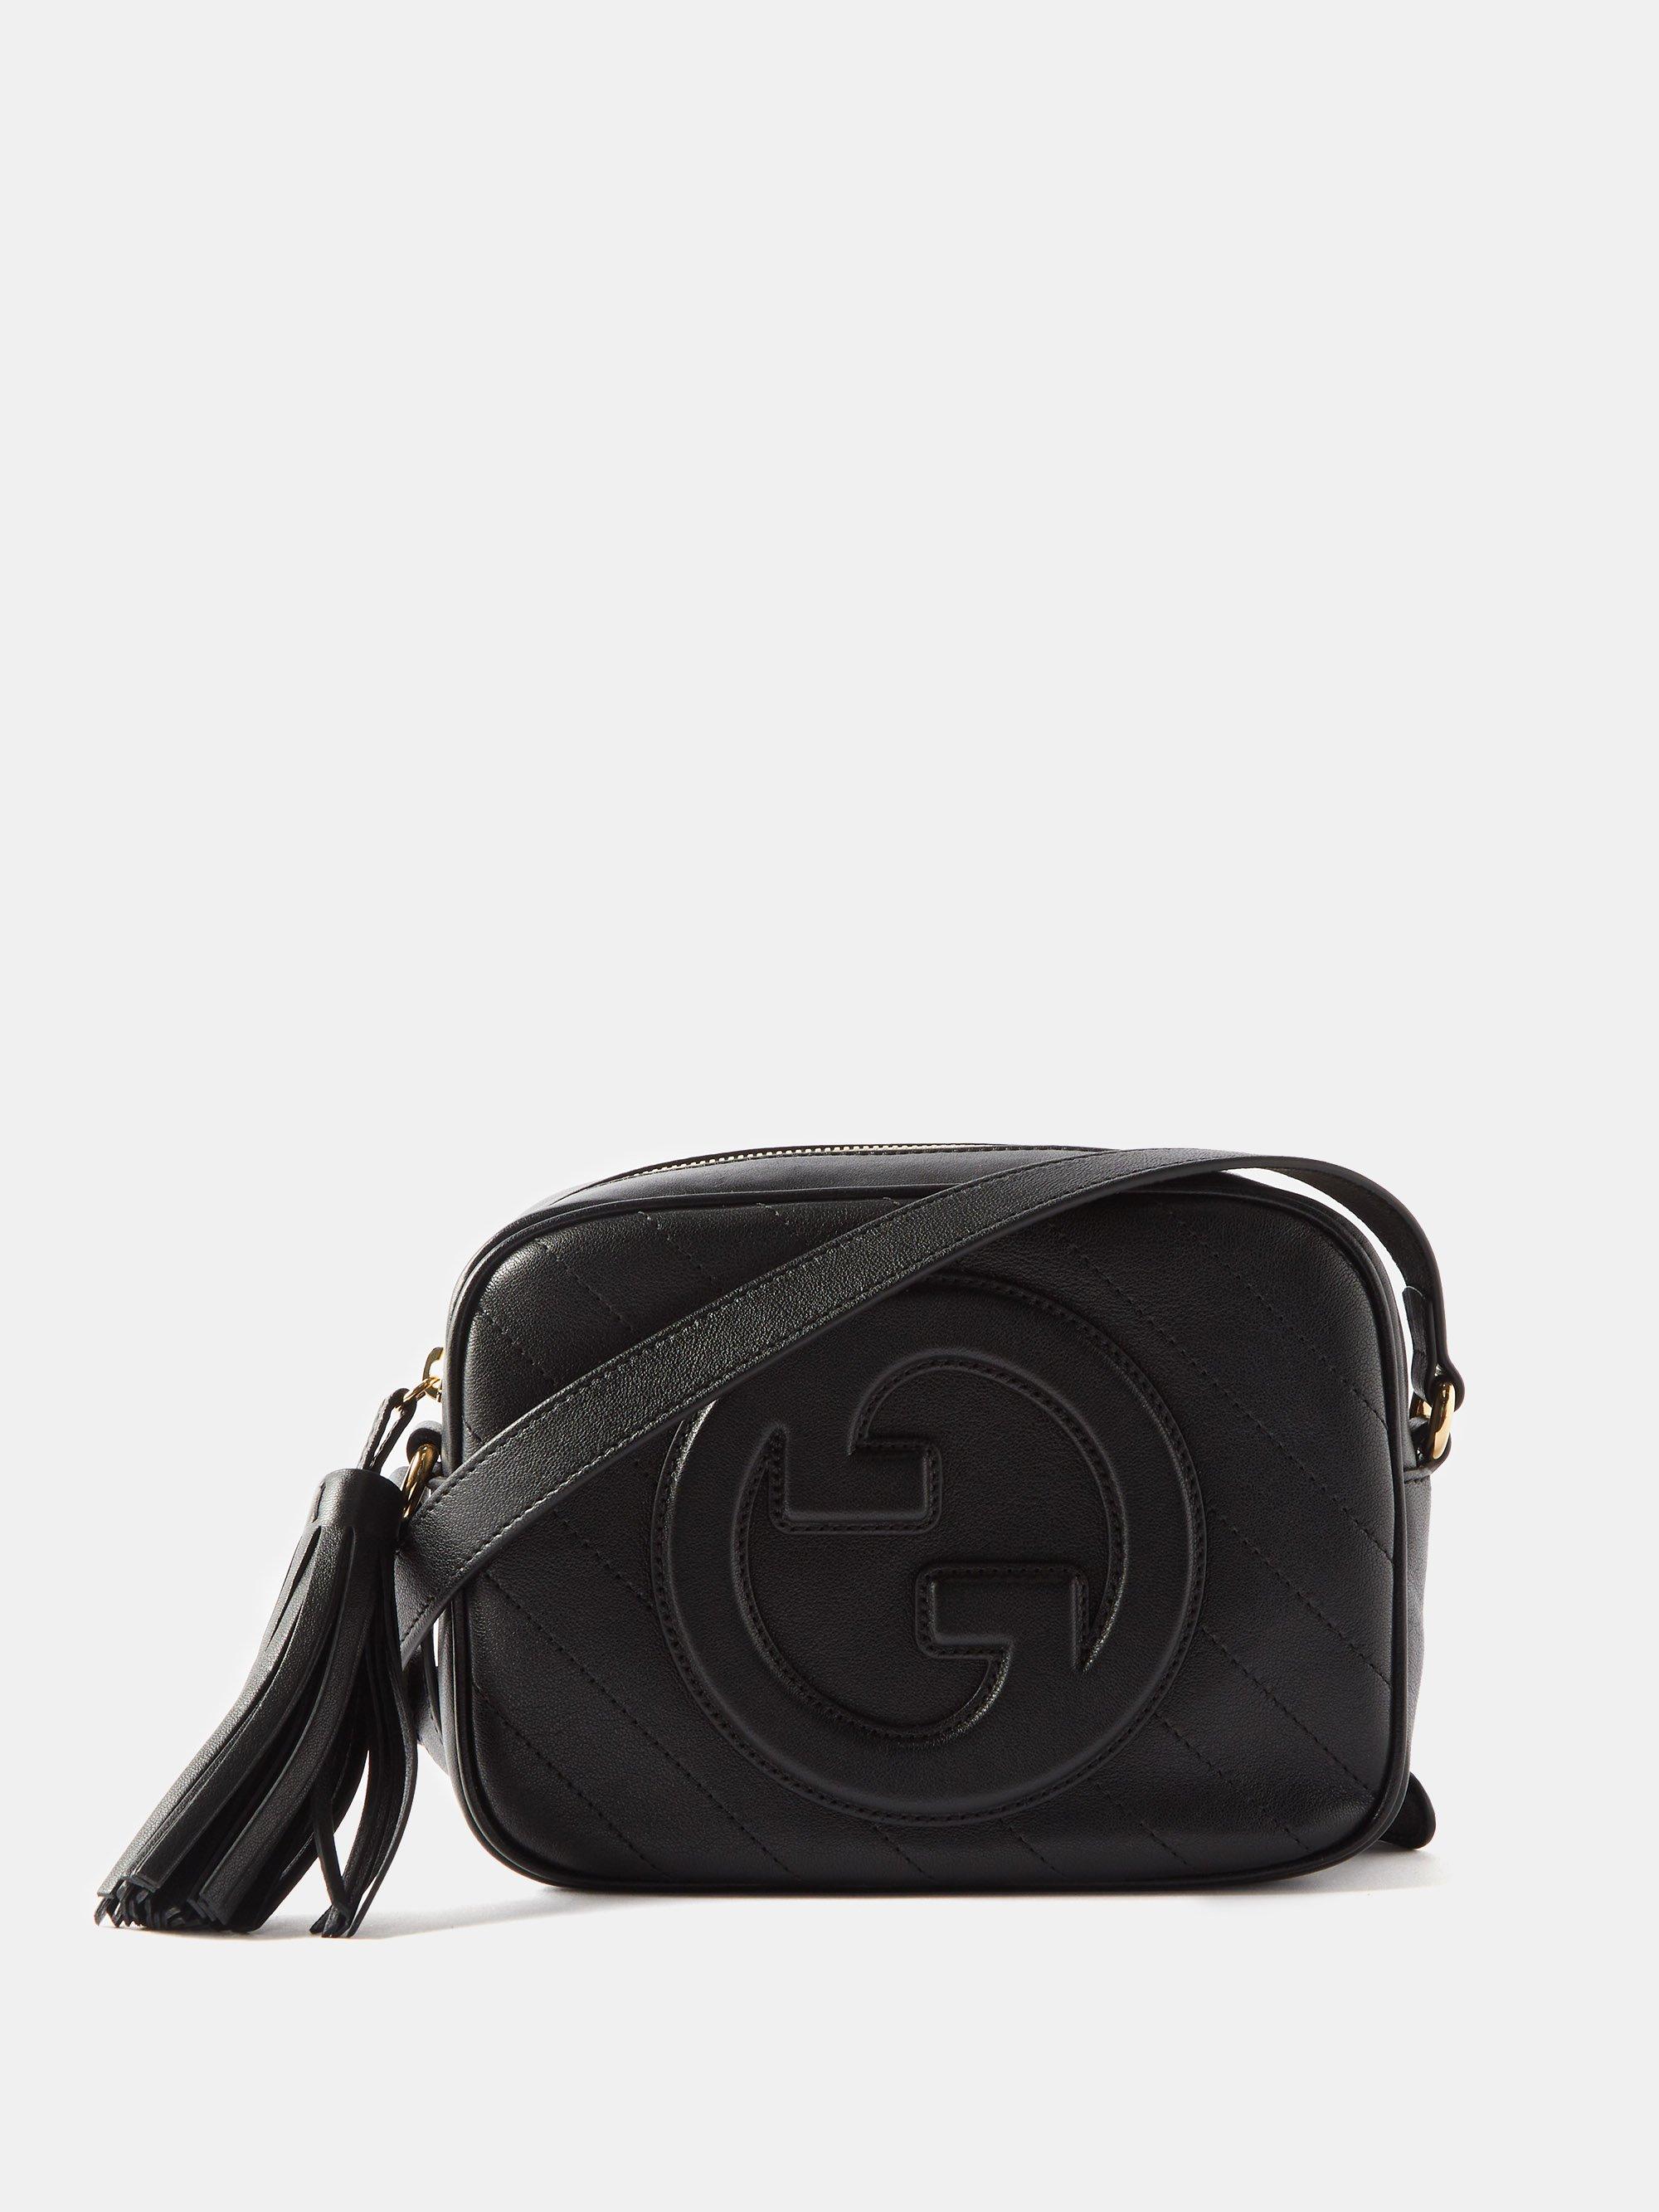 Gucci Blondie Leather Cross-body Bag in Black | Lyst